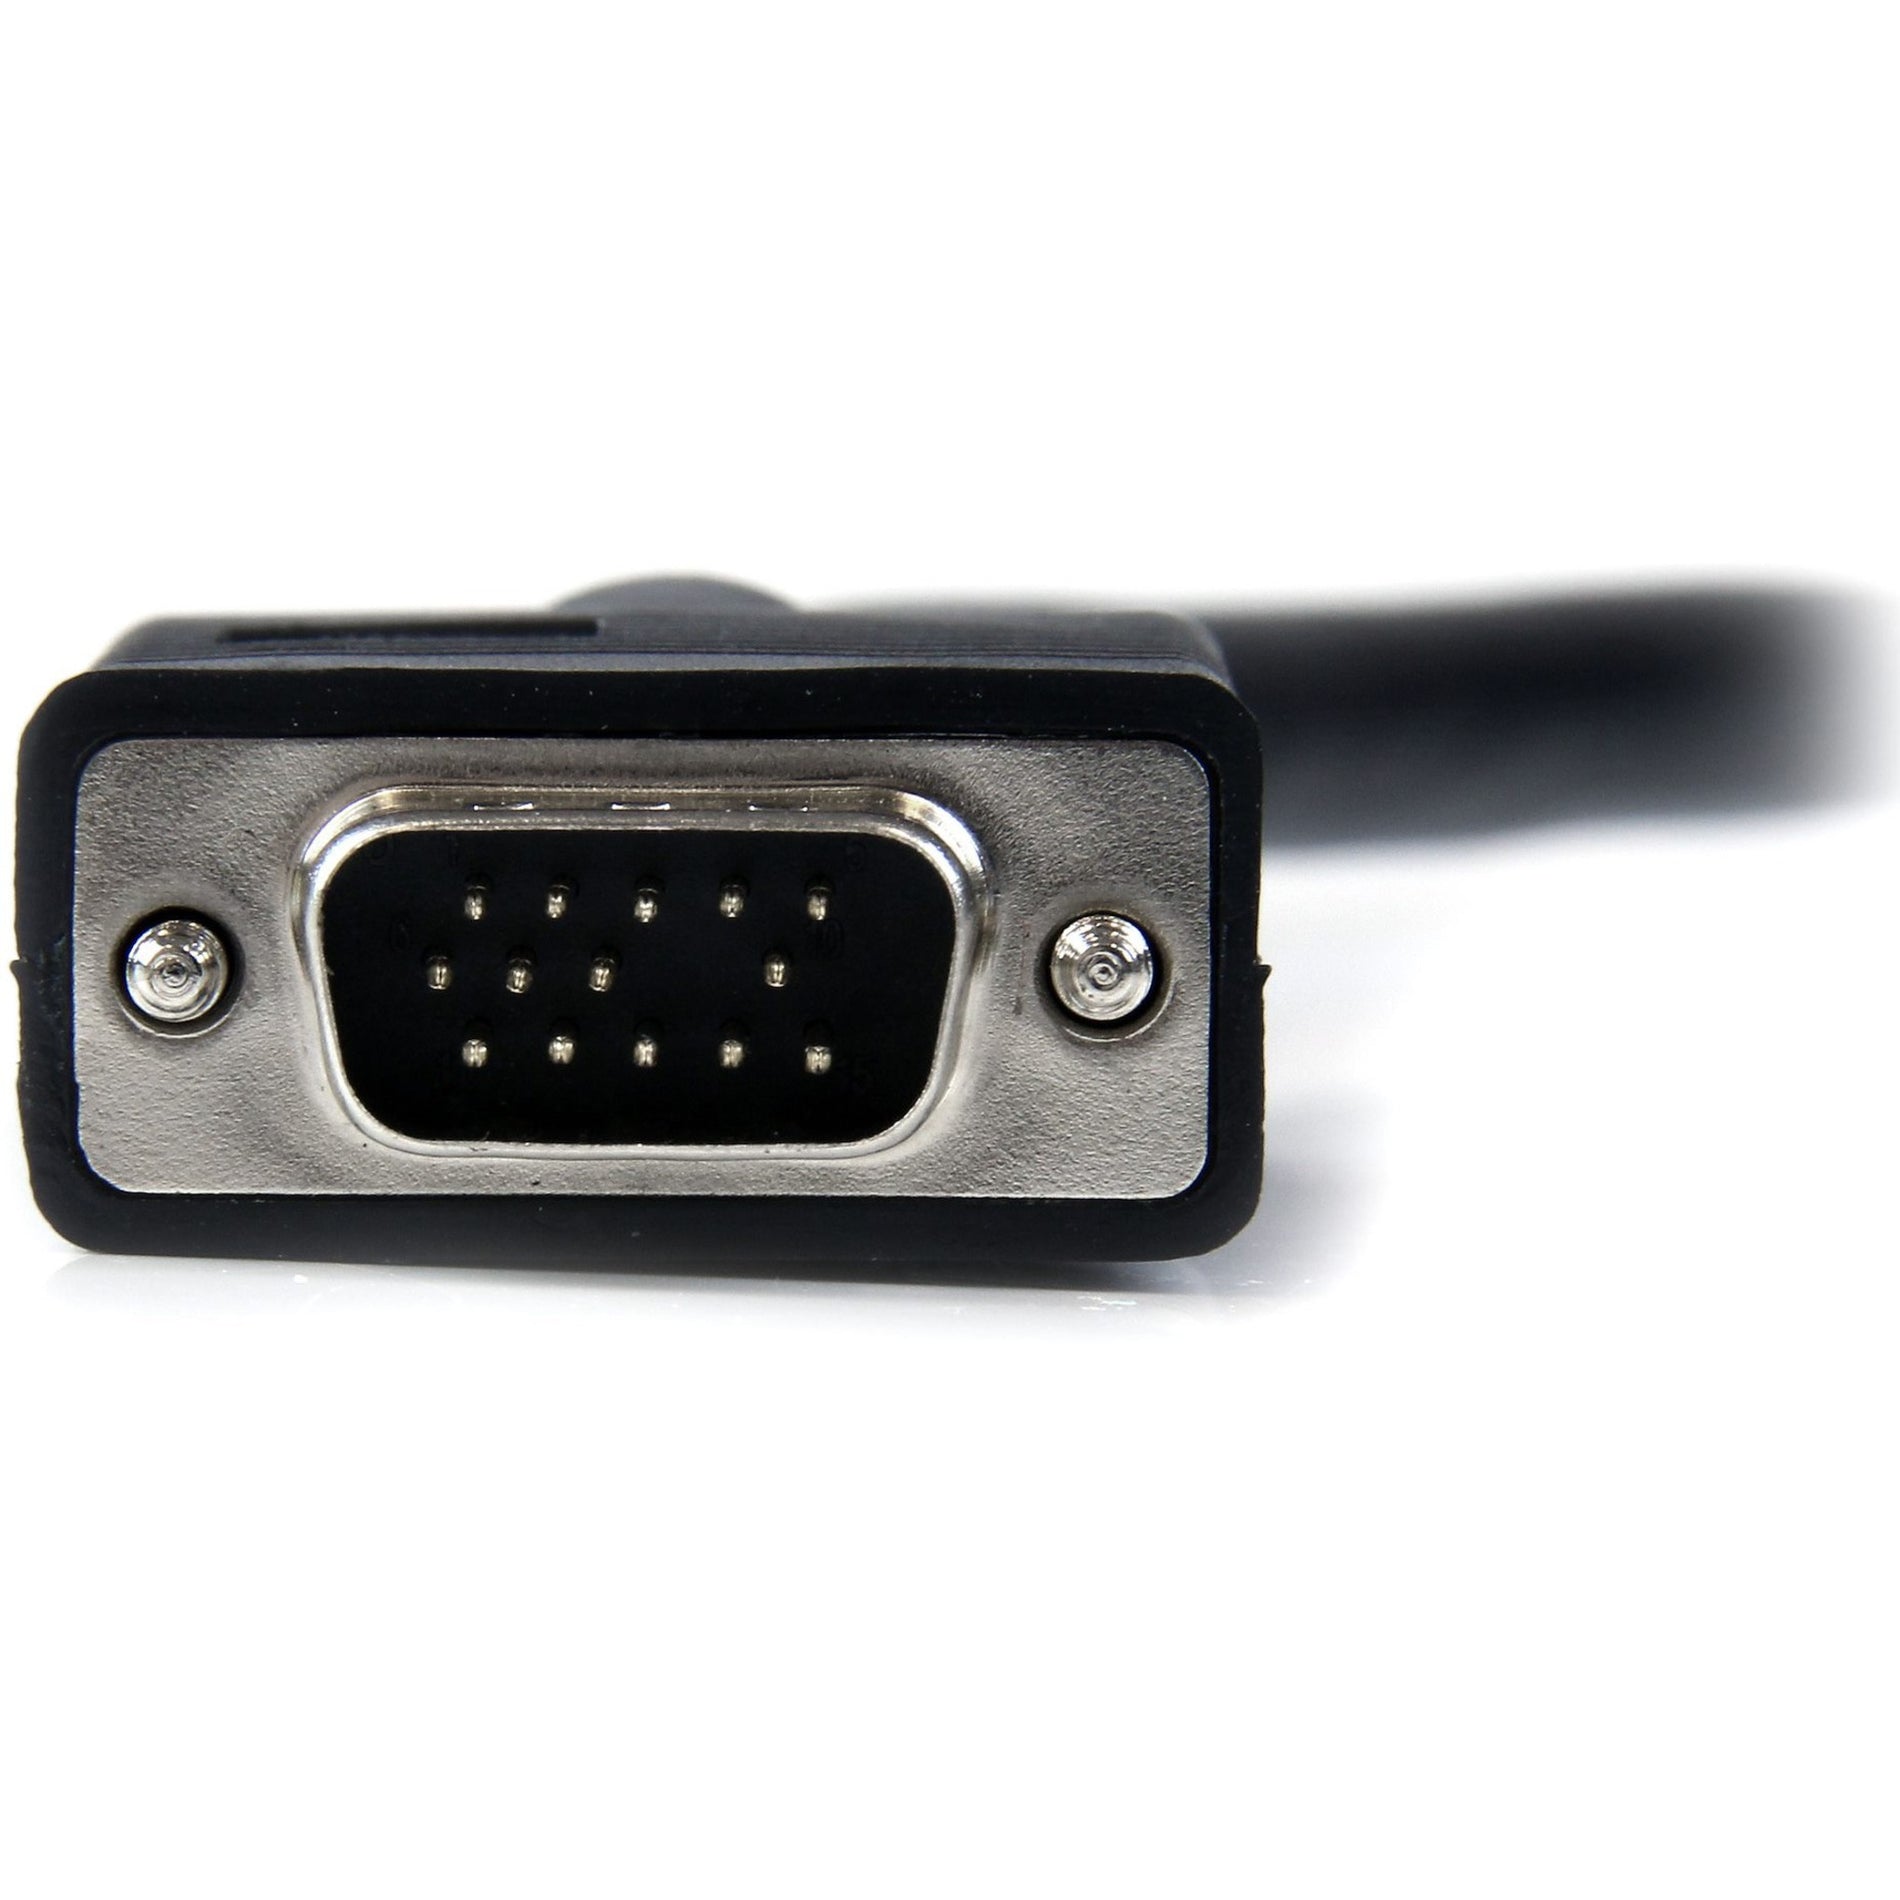 StarTech.com MXT101MMH100 Coax VGA Monitor Kabel 100 ft - Hochauflösendes SVGA geformt EMI-Schutz Ferritperle